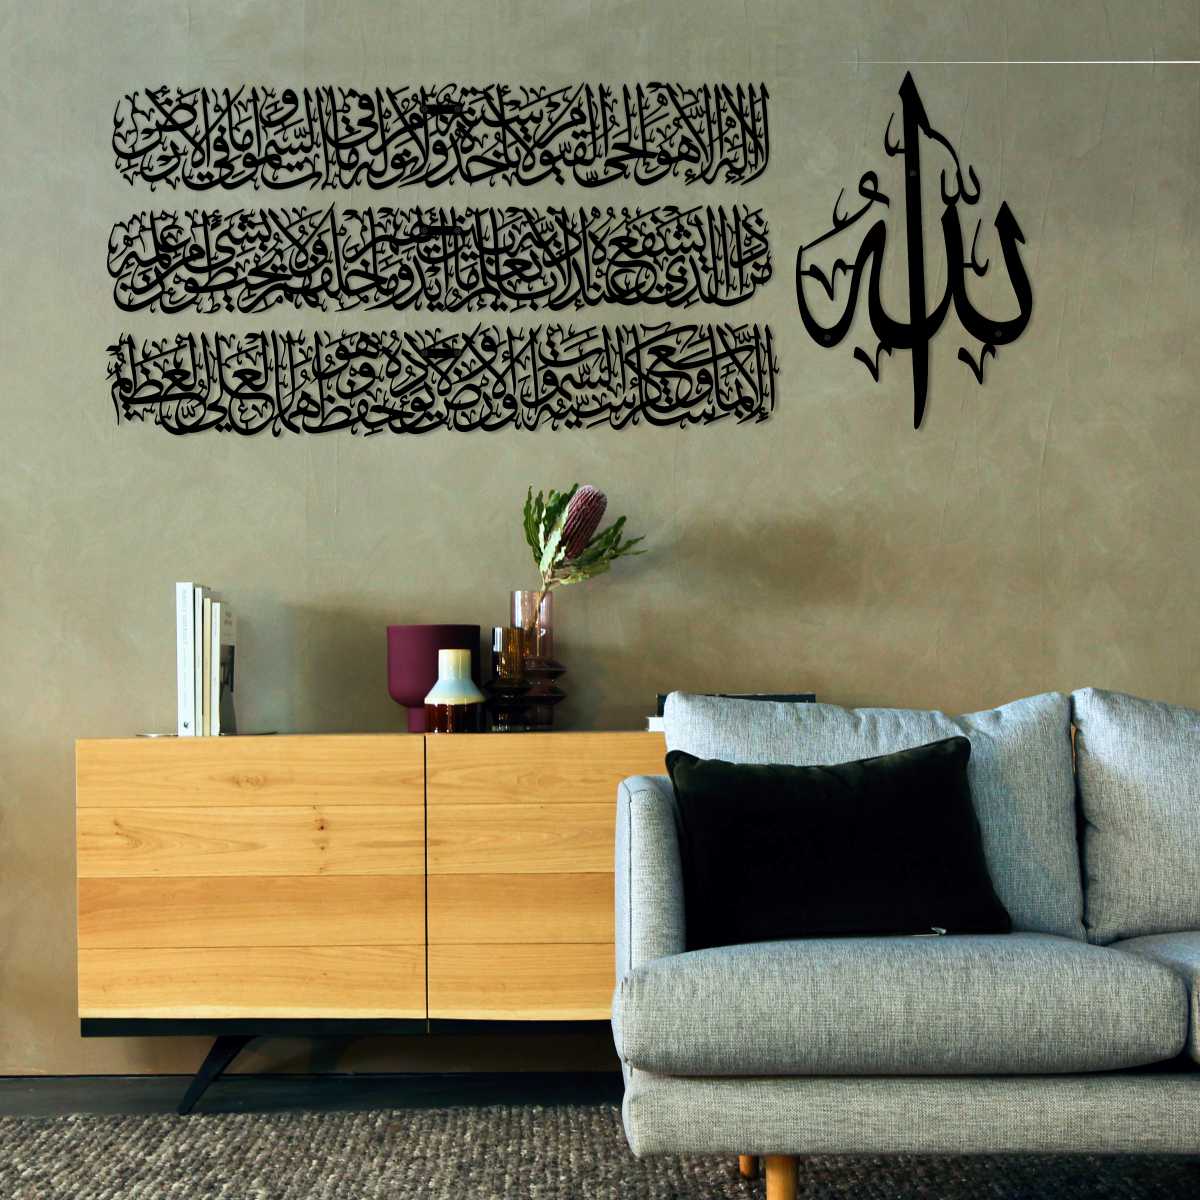 Luxurious Metal Ayat Al-Kursi - "A Distinctive Islamic Wall Decor for your Home or Office"